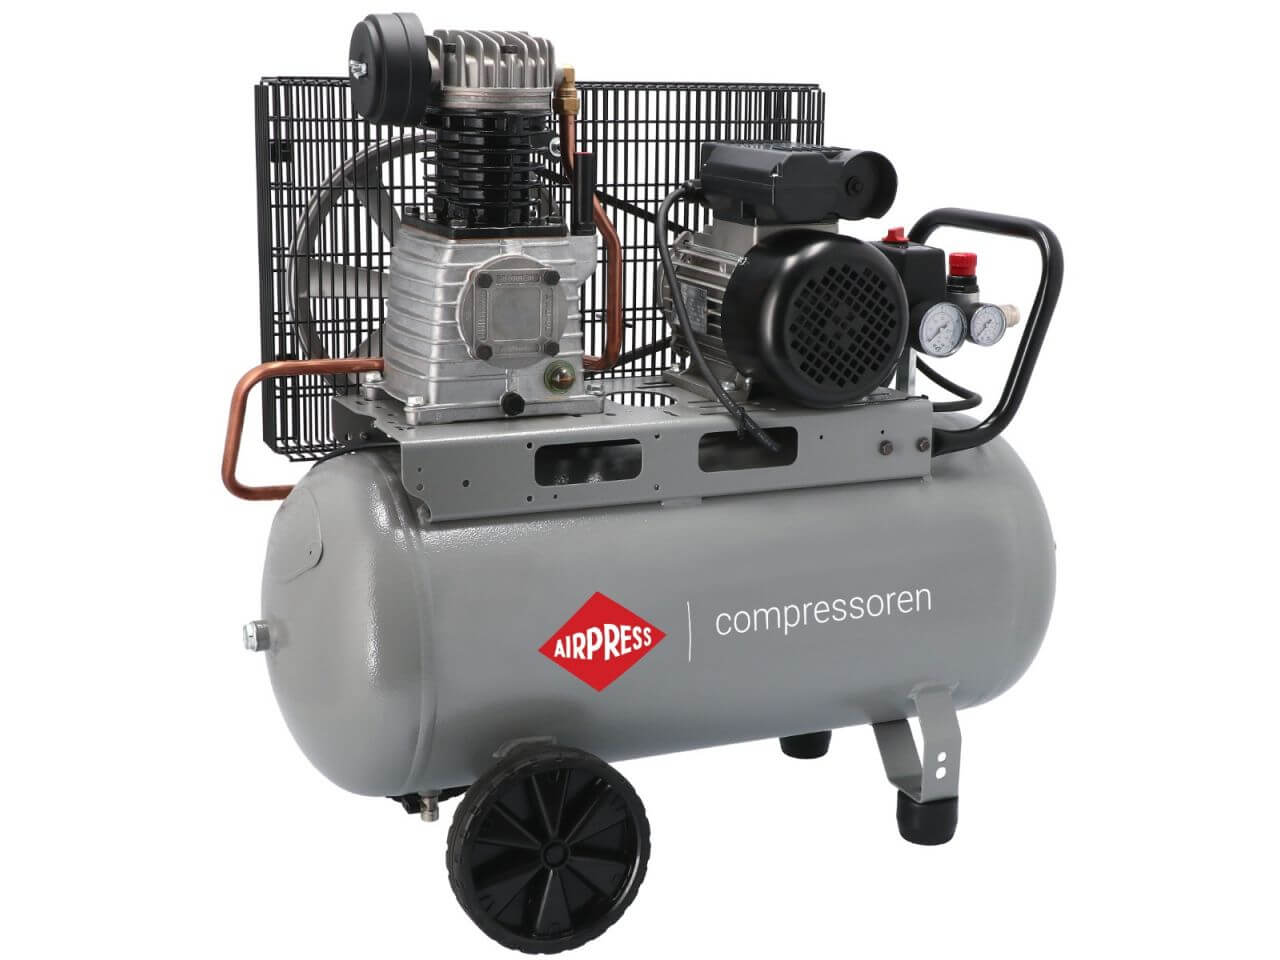 Compresor HL 310-50 de la Serie PRO